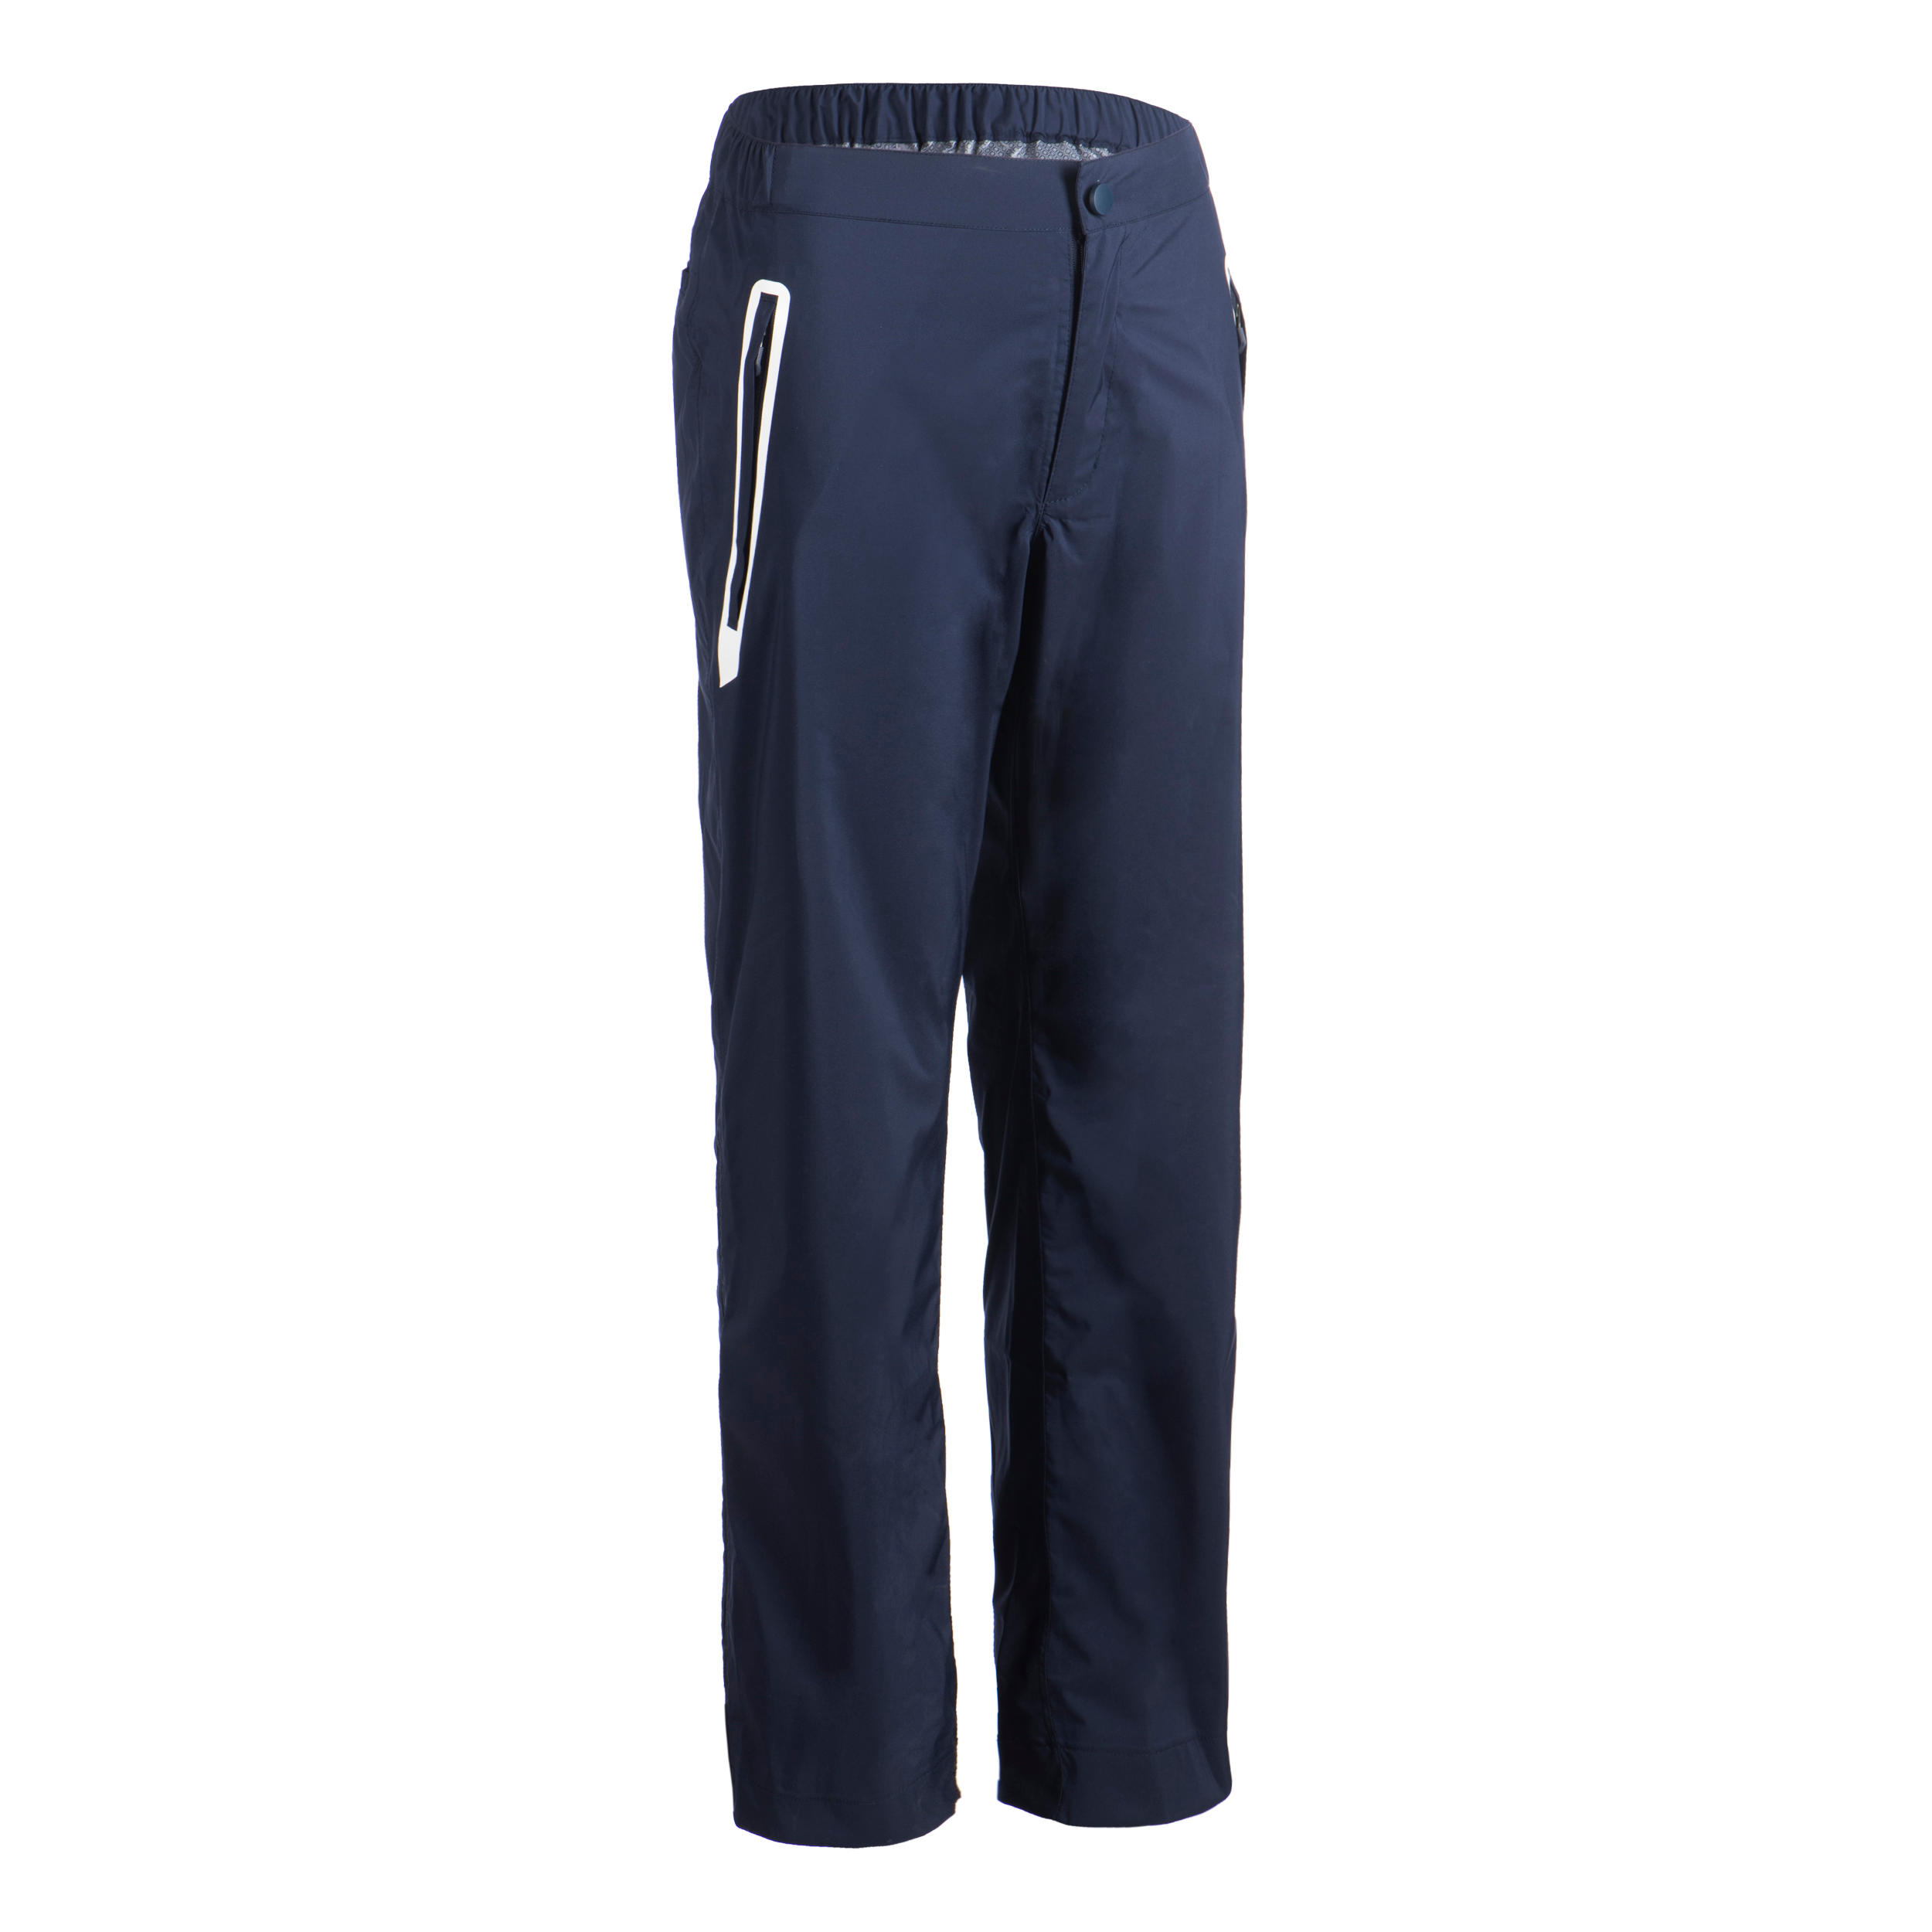 Kids golf waterproof rain trousers RW500 navy blue